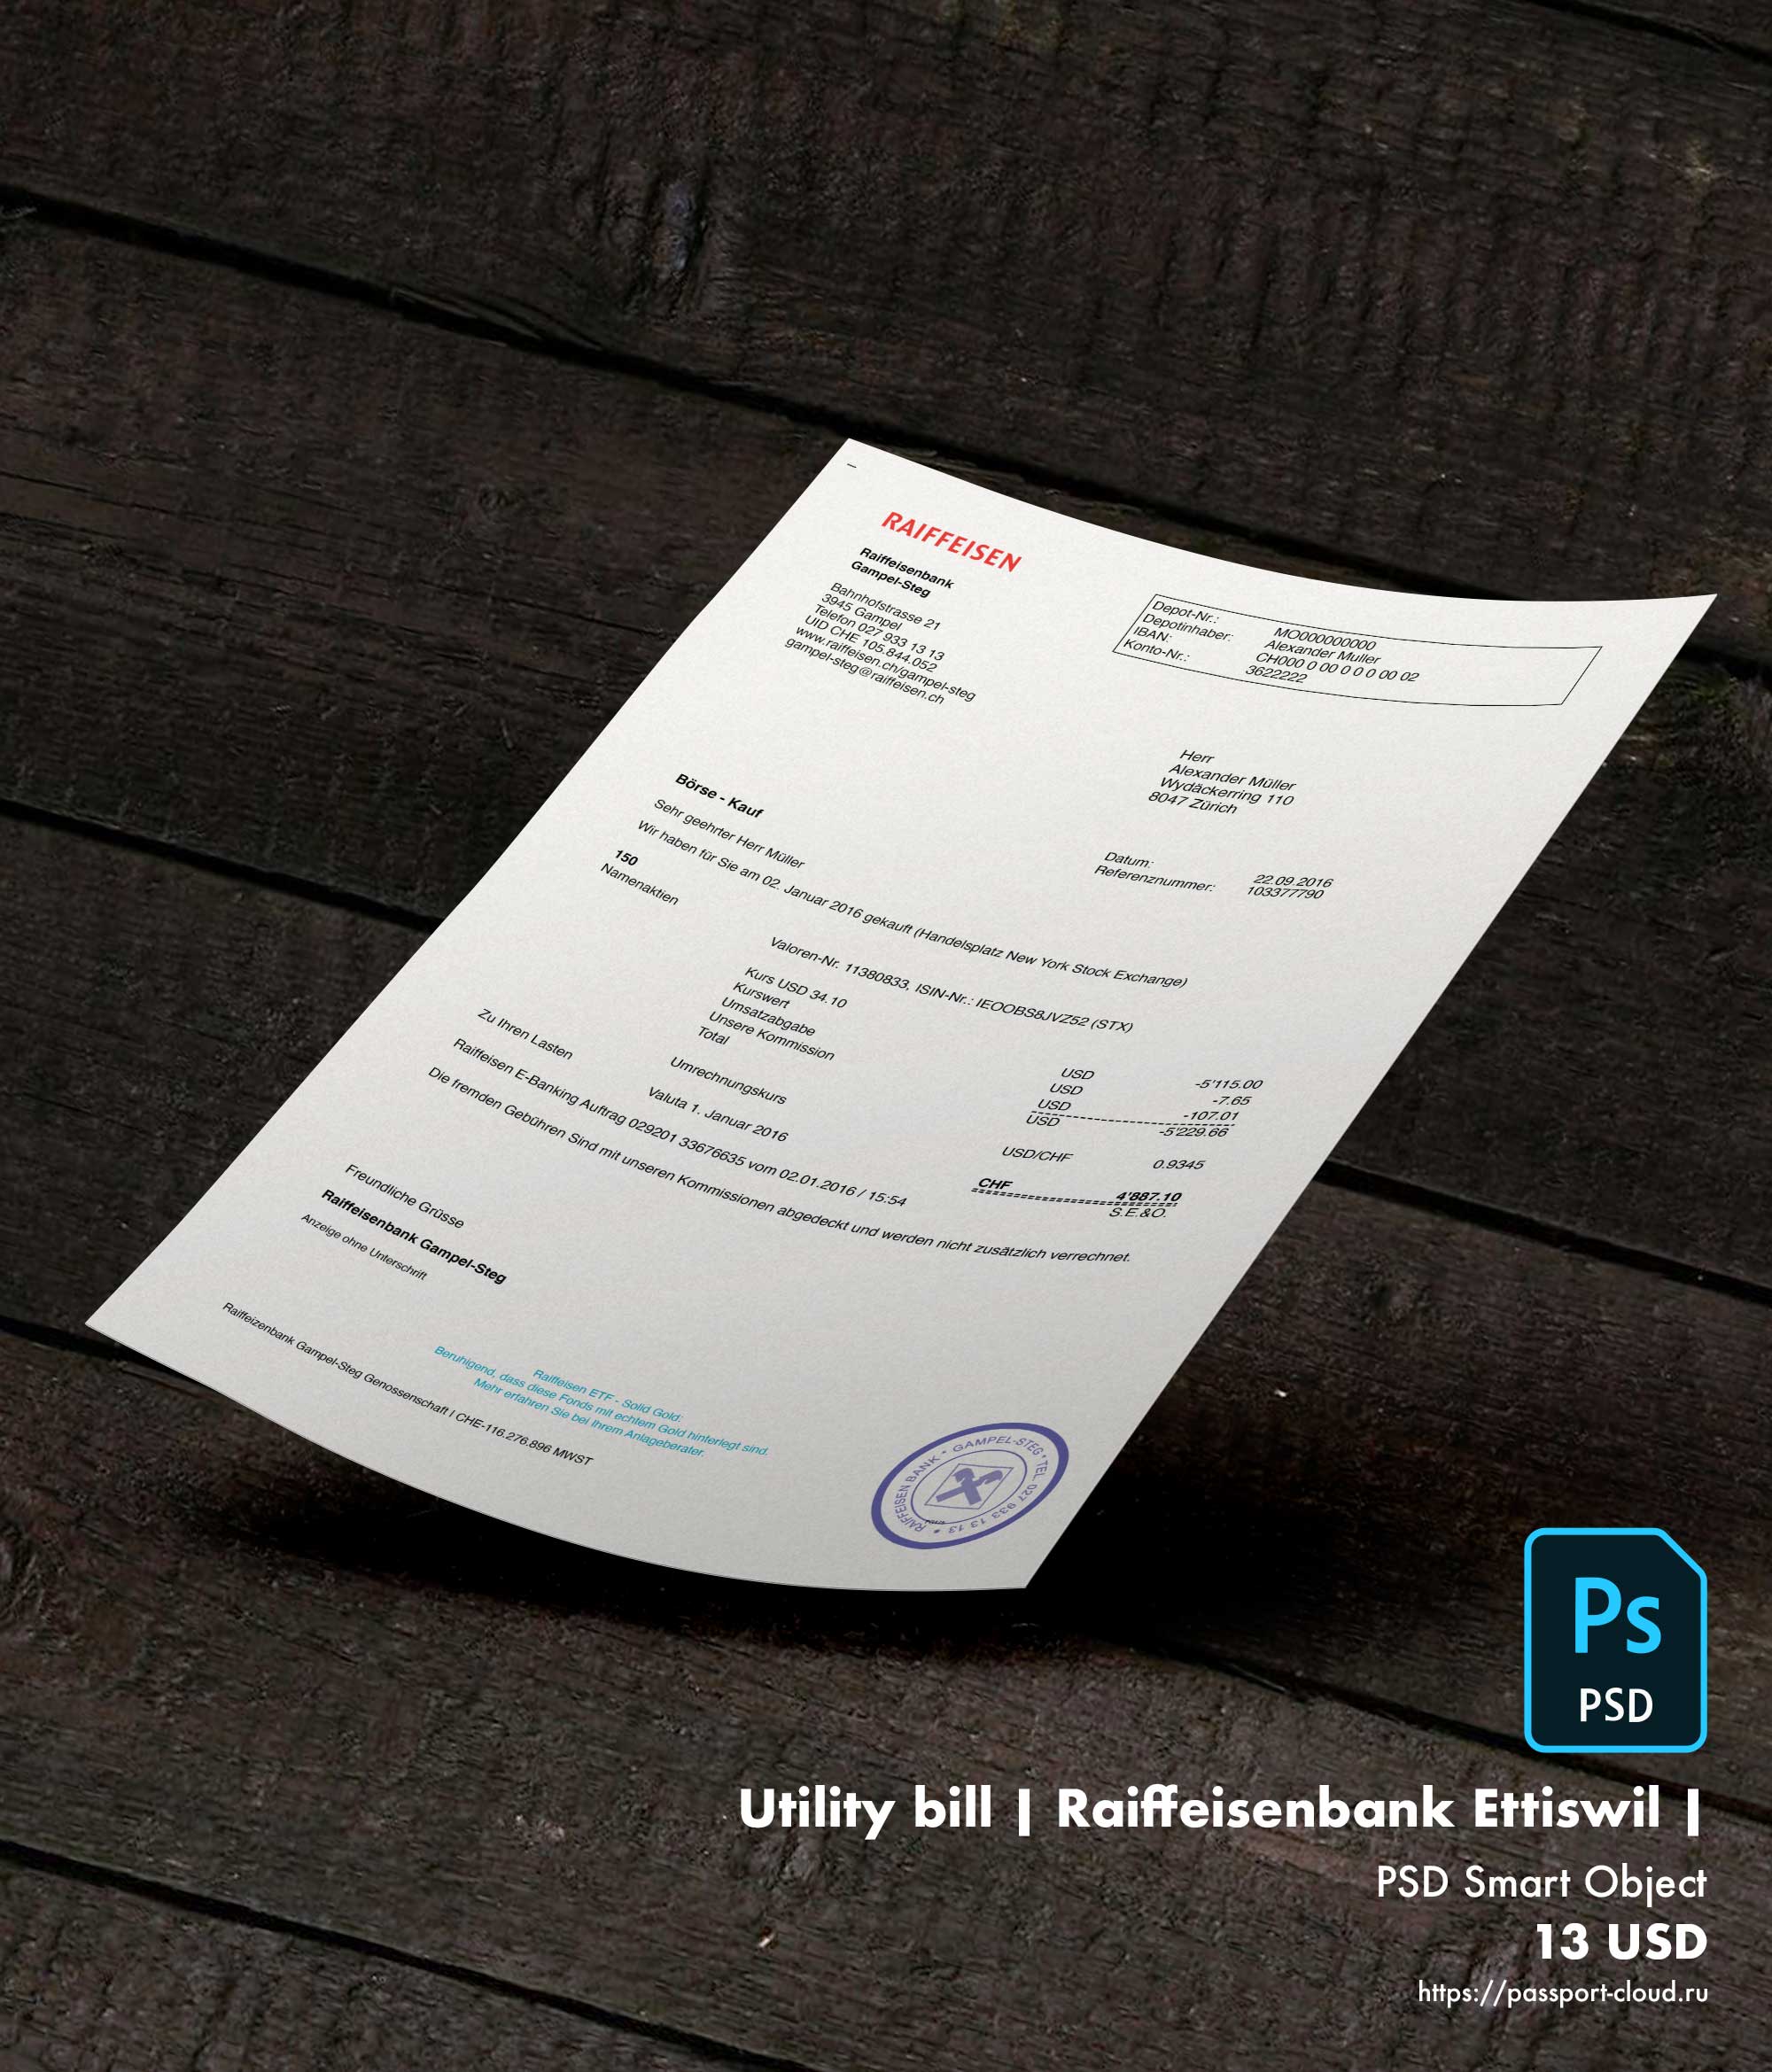 Utility bill | Raiffeisenbank Ettiswil | Switzerland |1